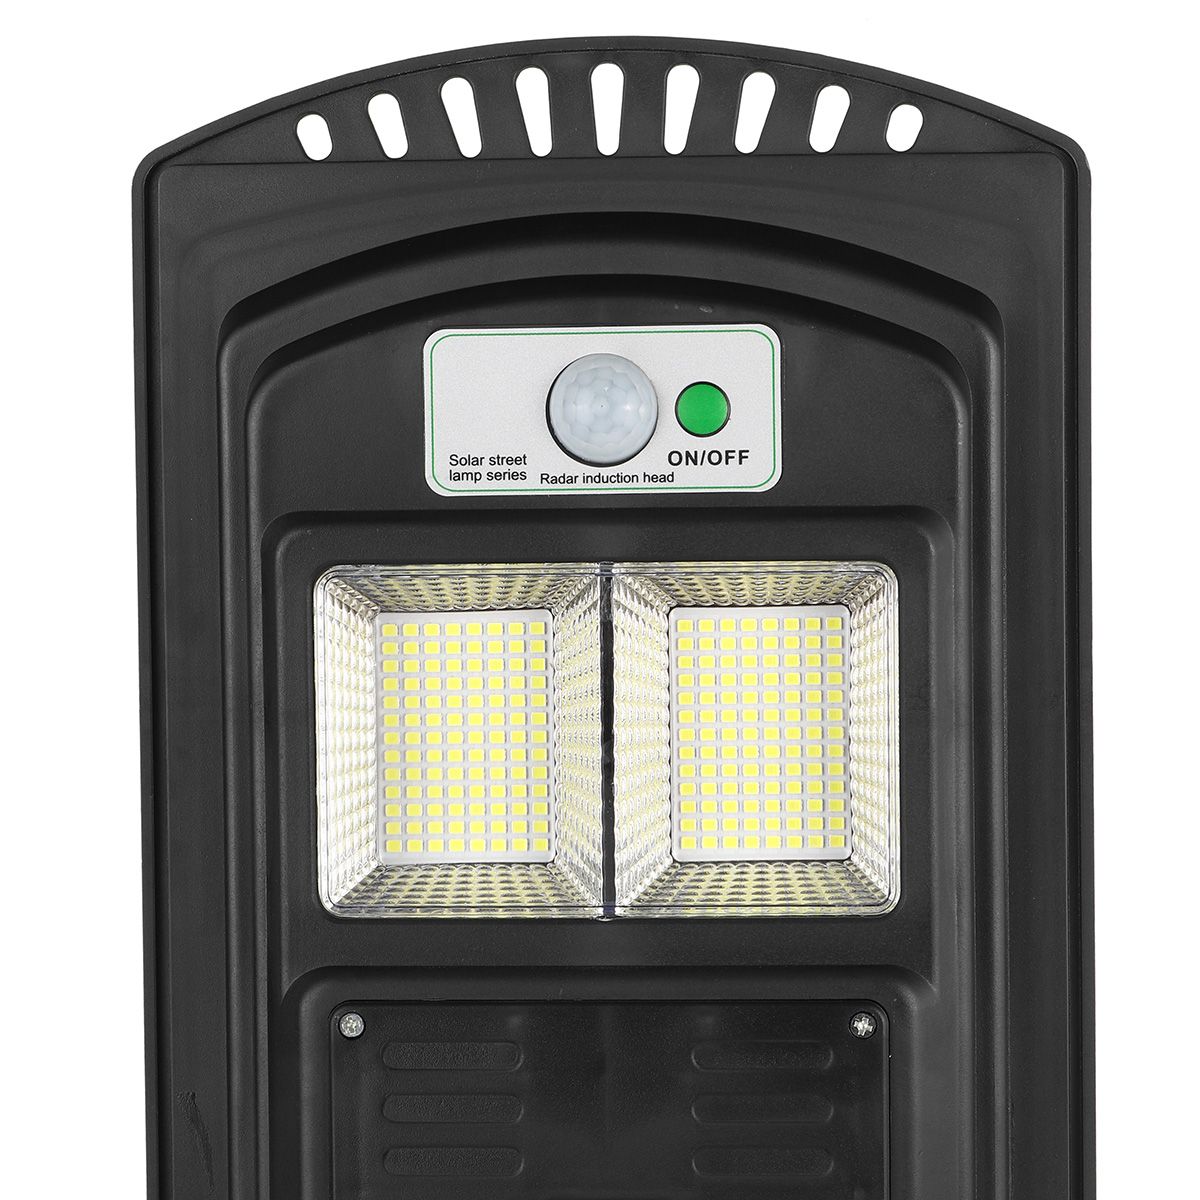 500-2500W-208-624-LED-Solar-Street-Light-PIR-Motion-Sensor-Wall-Lamp-with-Remote-1704888